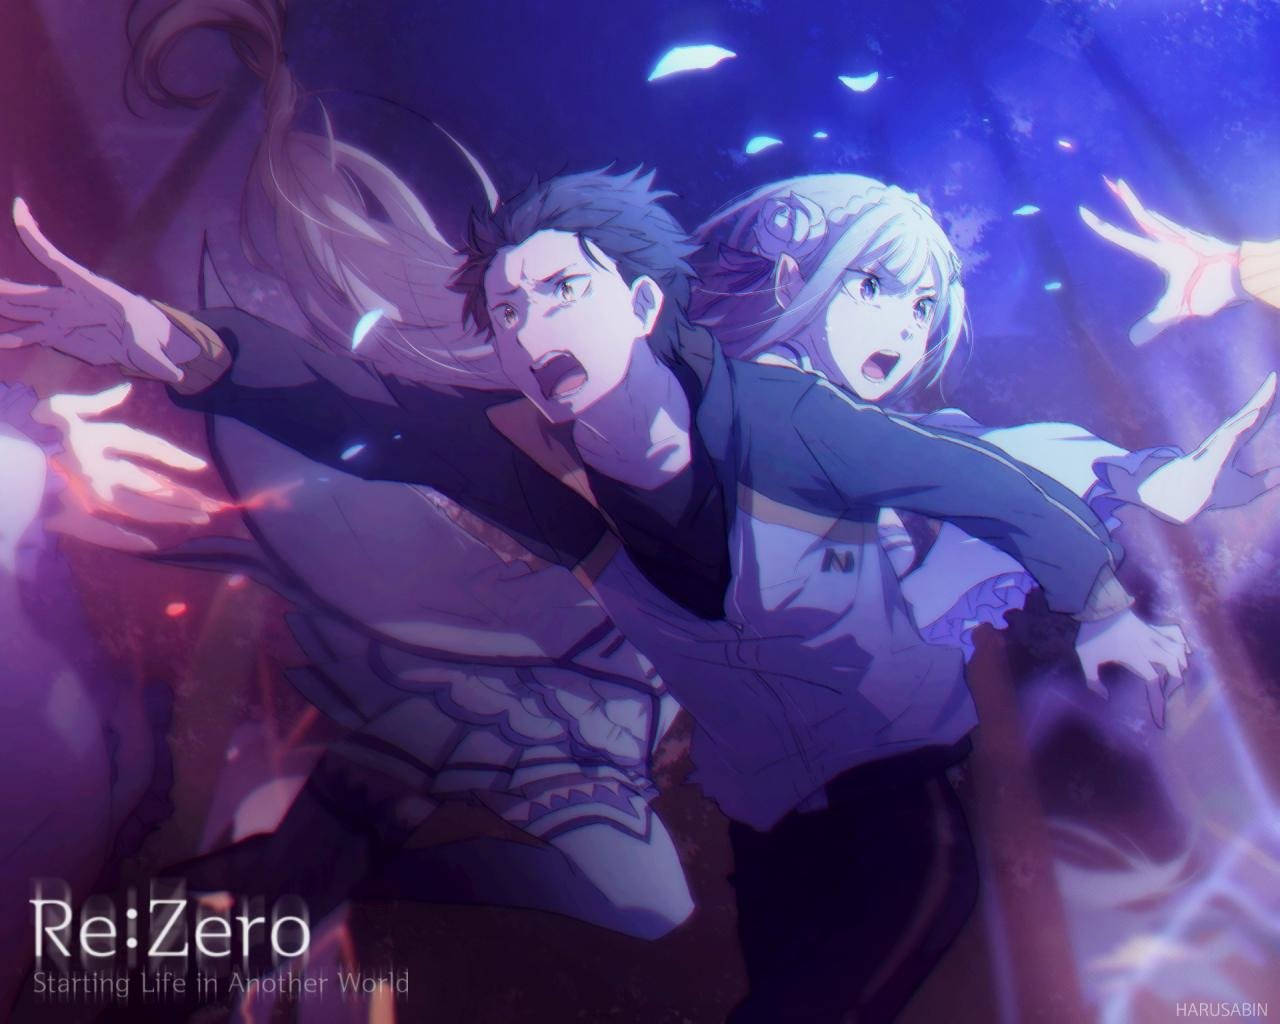 Emilia and Subaru together in the world of Re: Zero Wallpaper